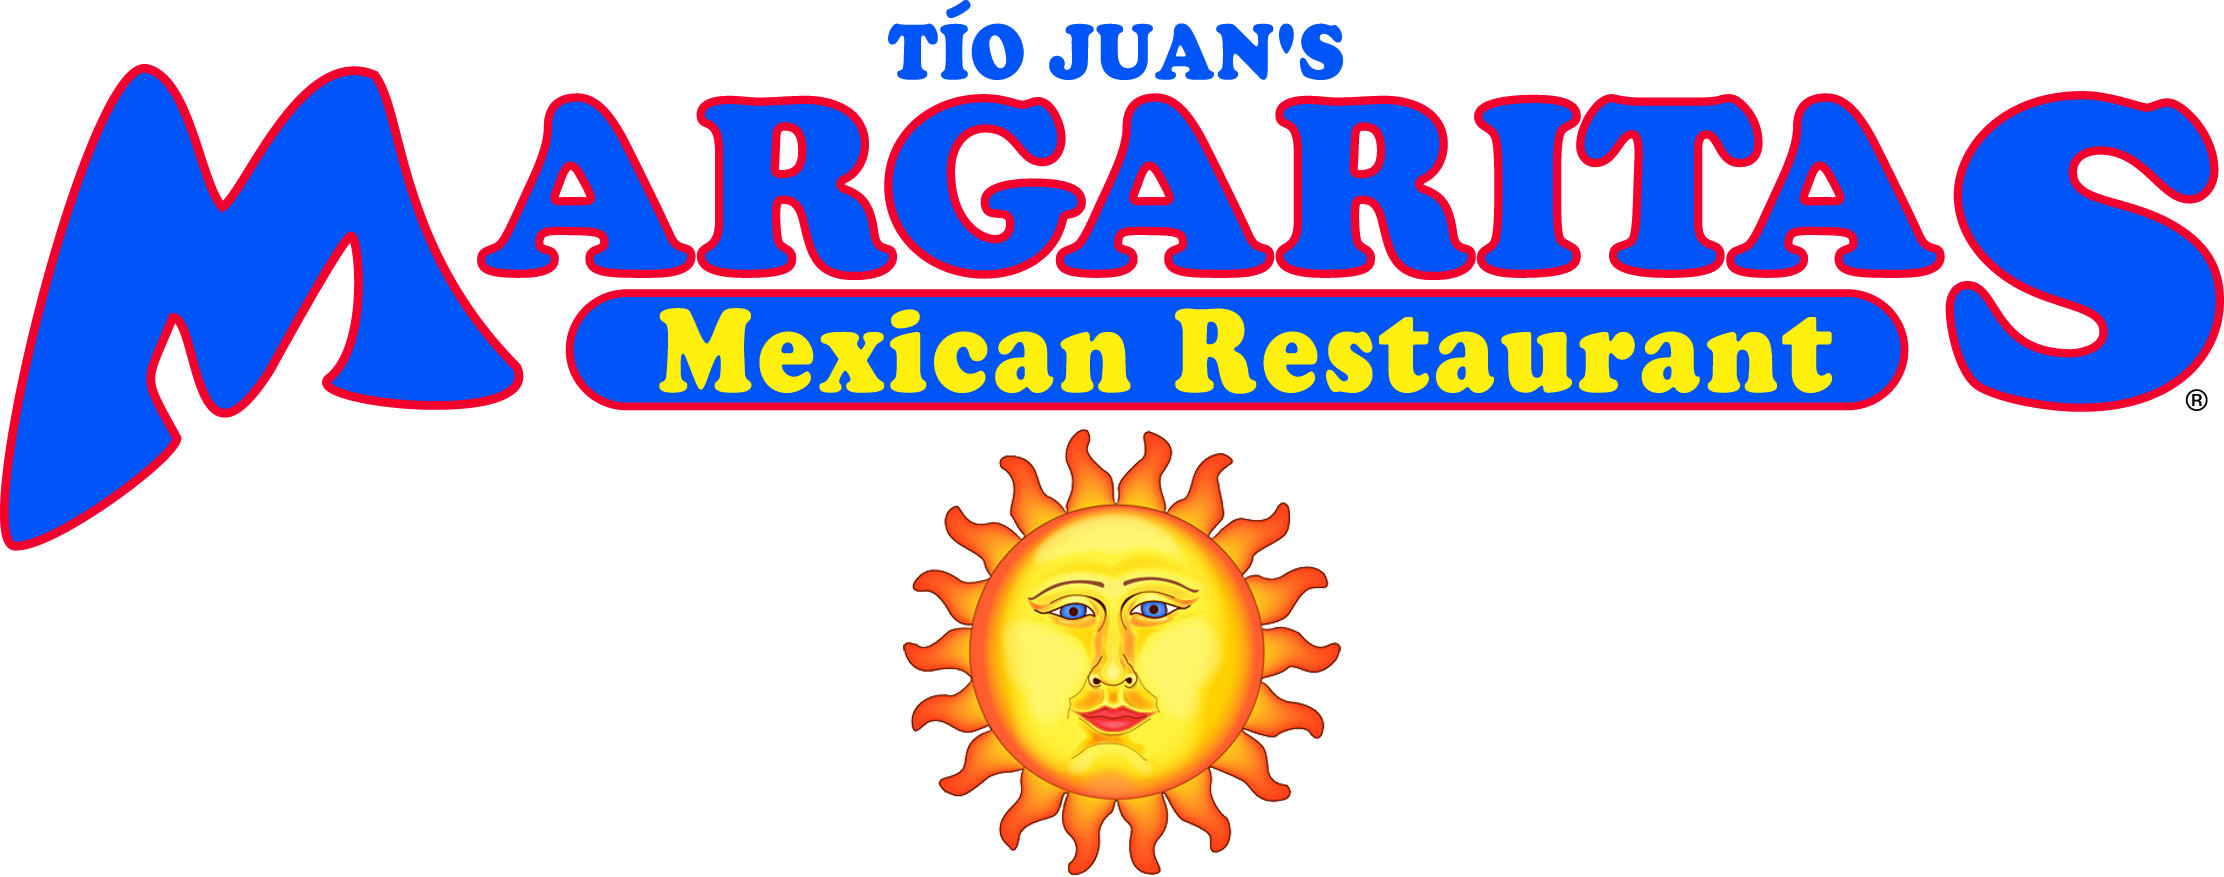 Margaritas Mexican Grill
 Margaritas Mexican Restaurant Unveils New Menu